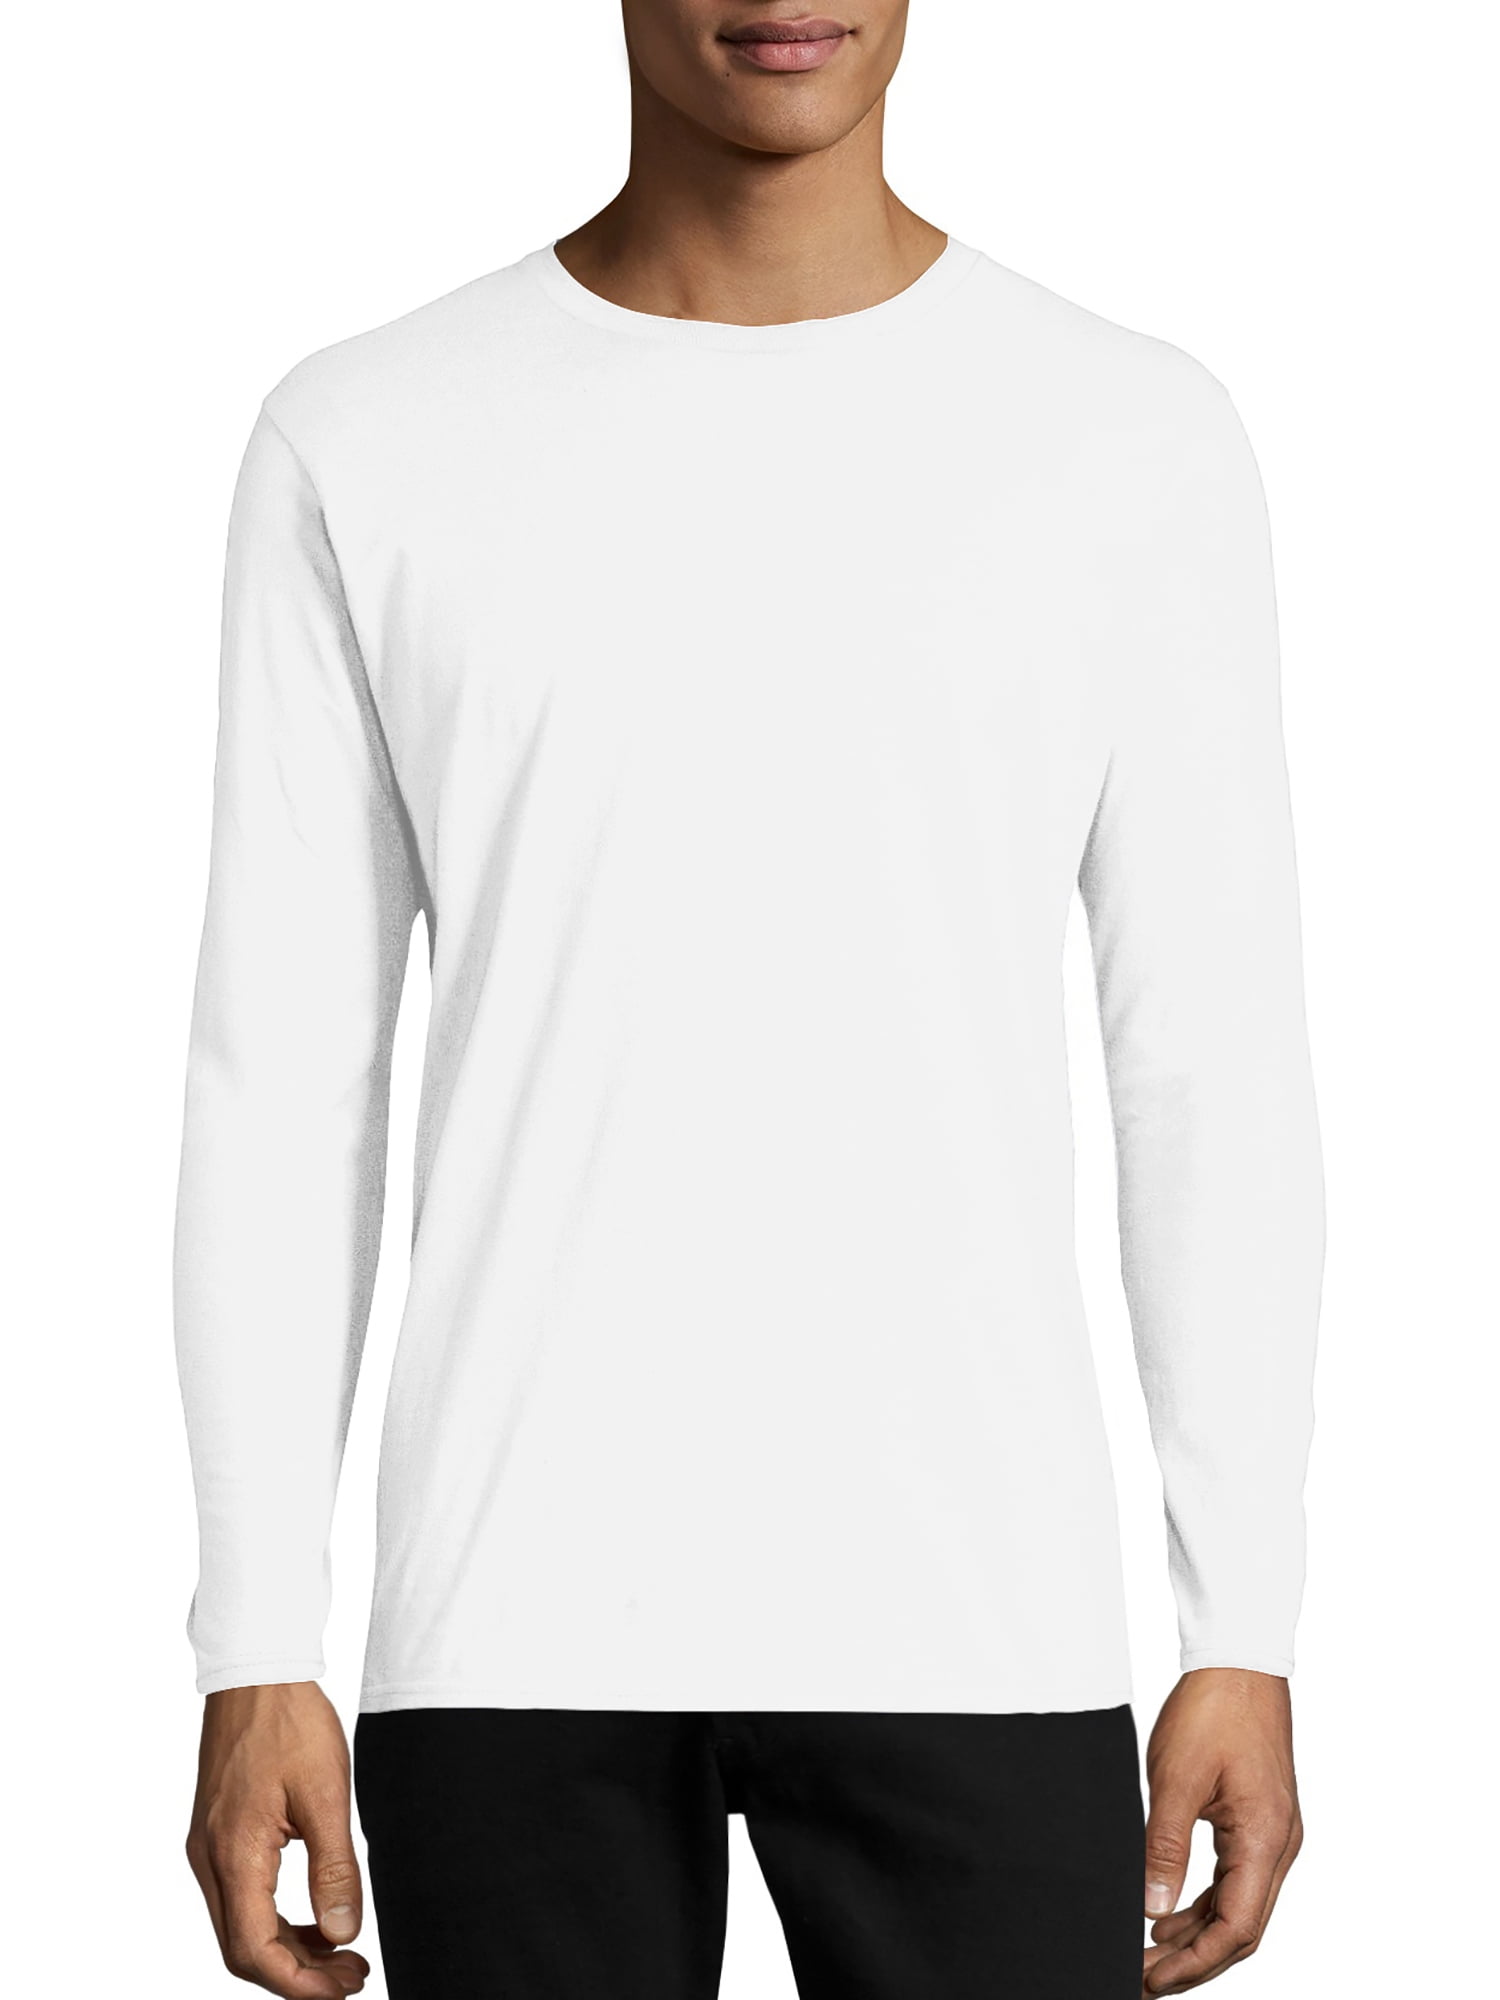 ANVIL Long SleeveT-Shirt WHITE LOT 6 SHIRTS ADULT LARGE SILK SCREEN tee 